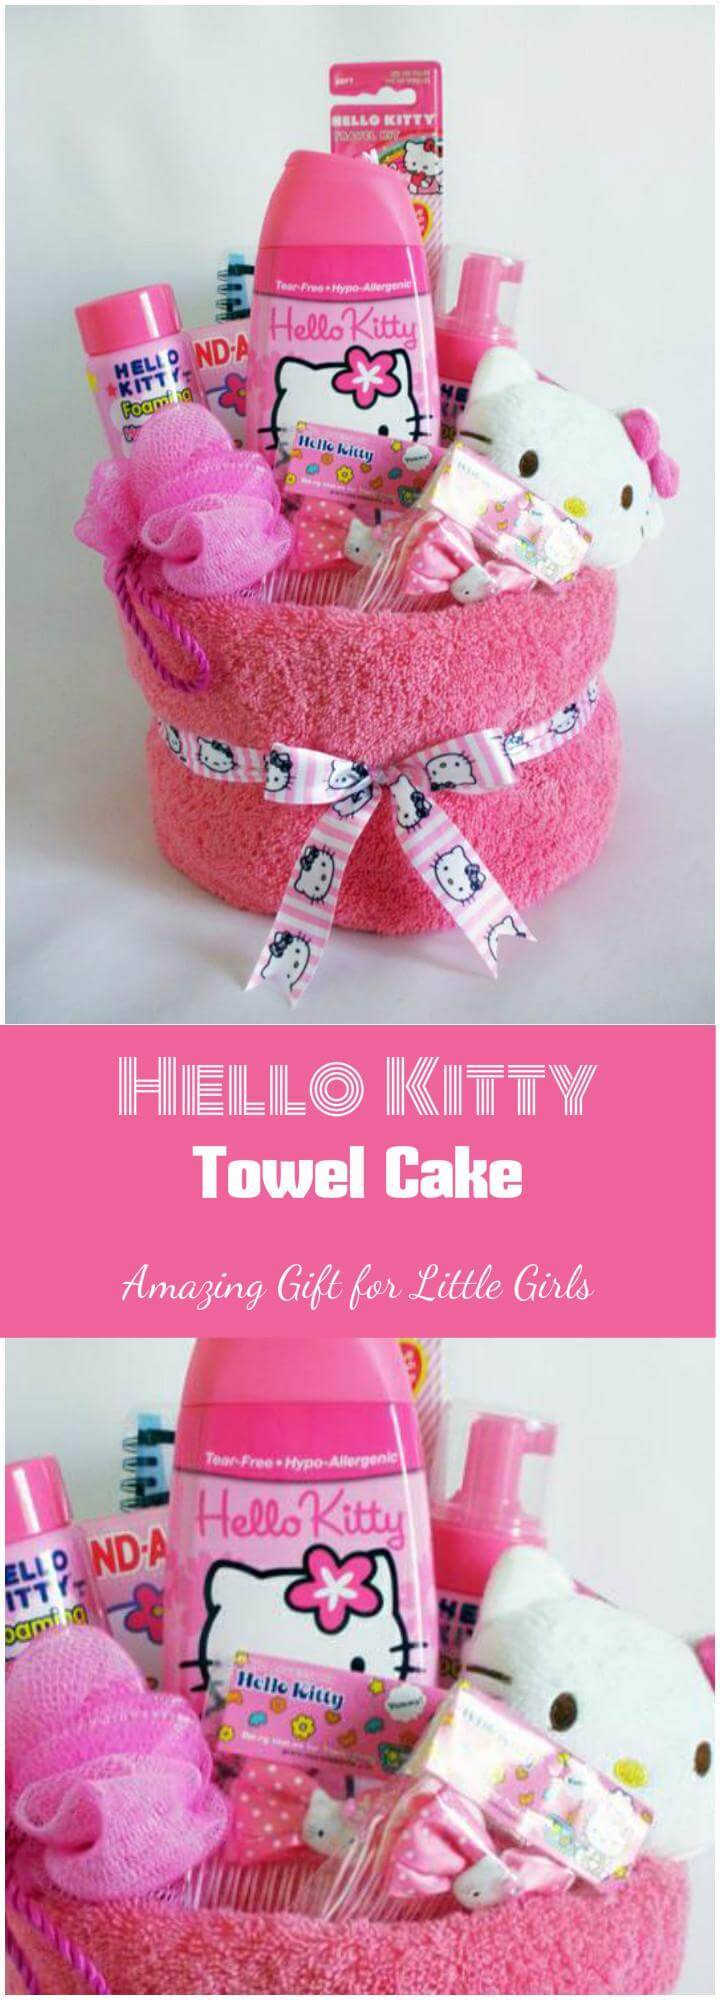 Superb Hello Kitty towel cake or gift basket